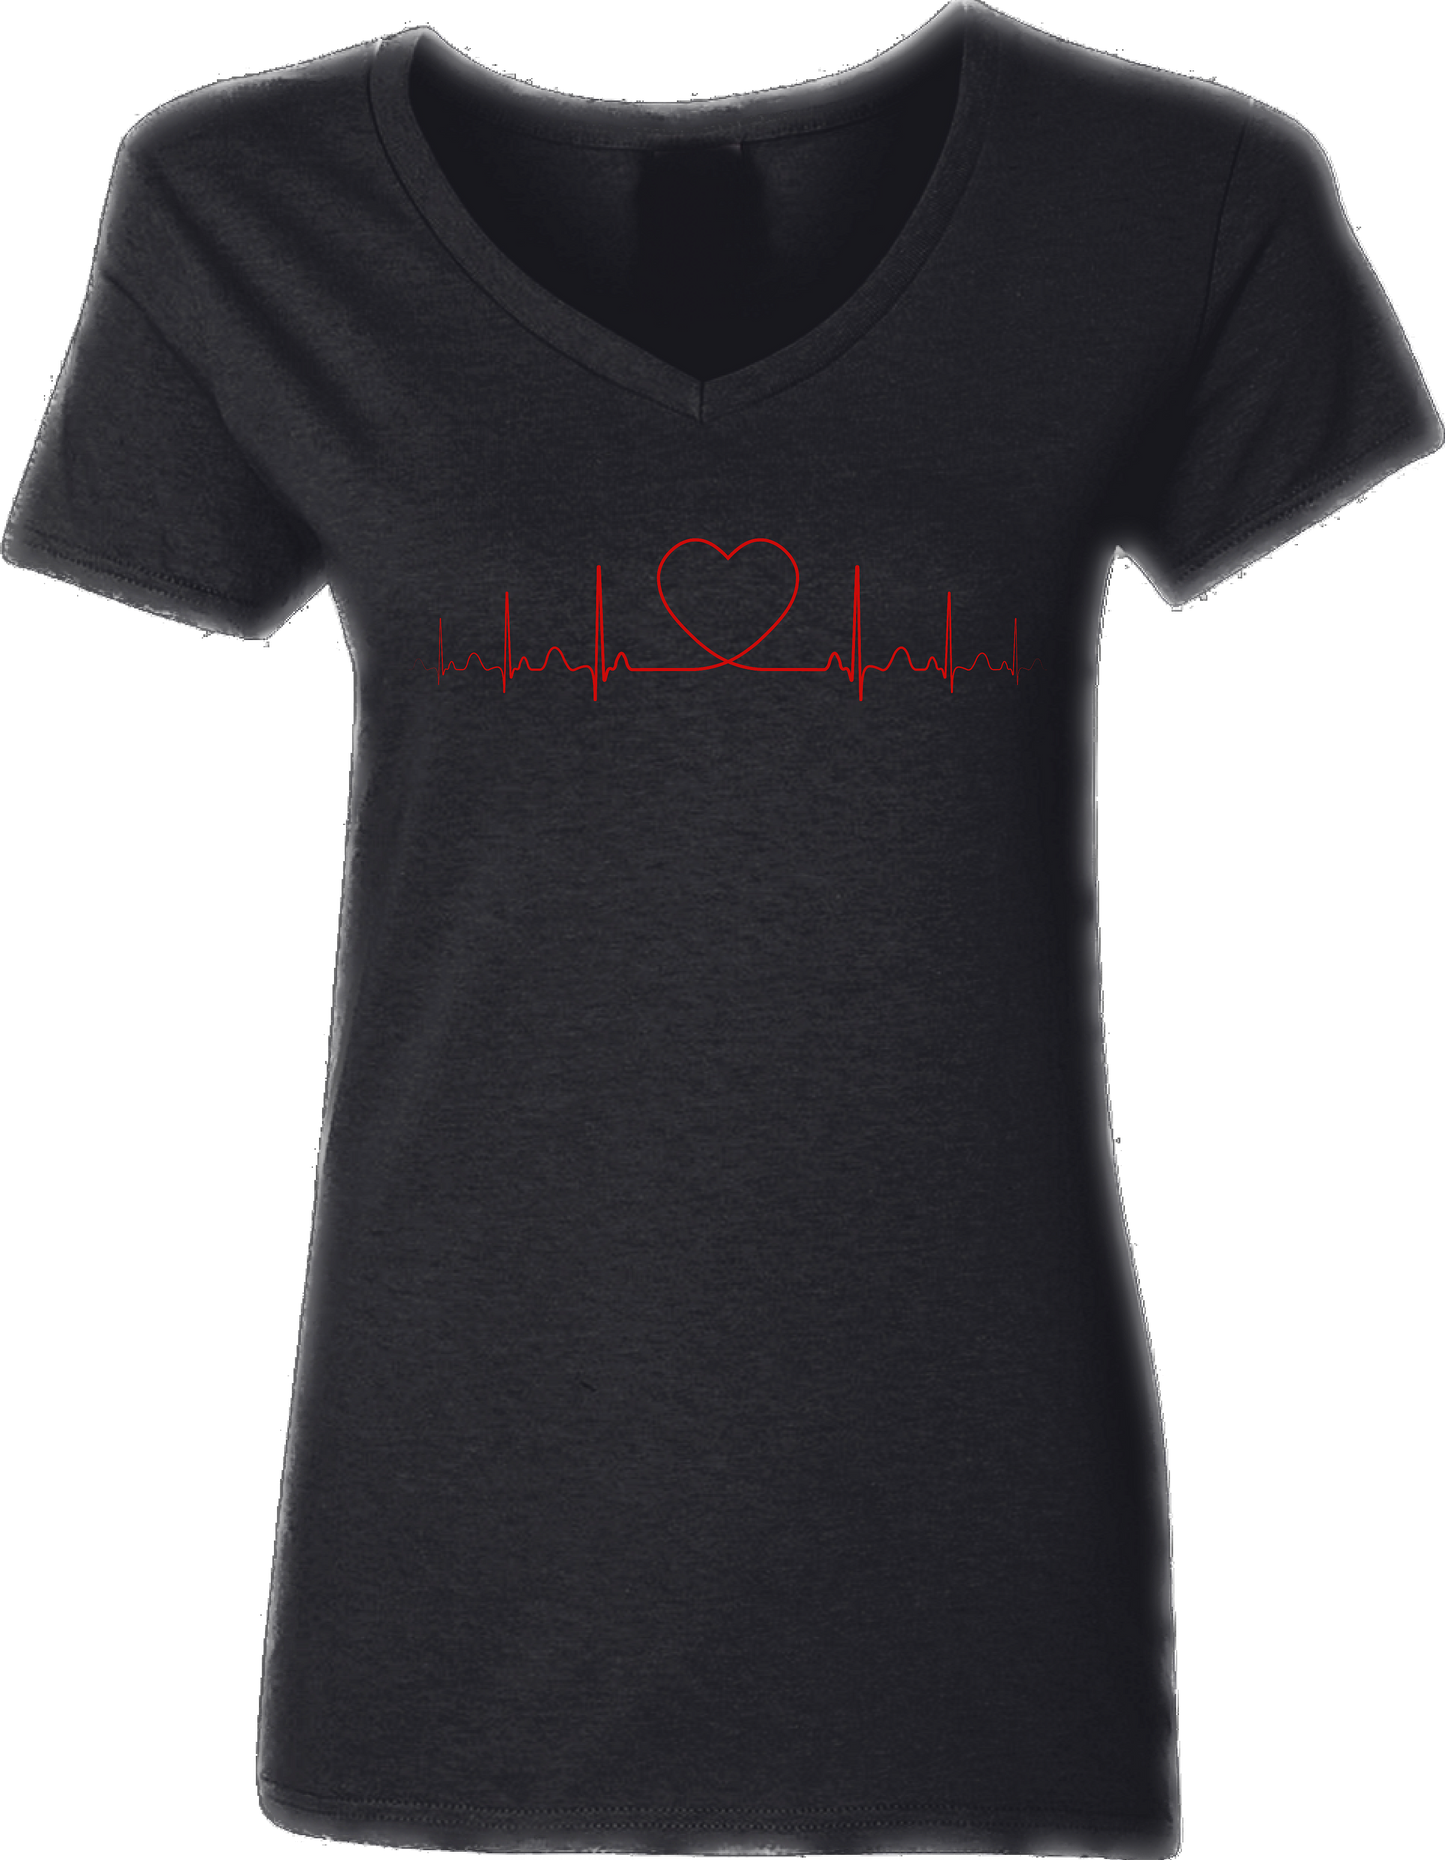 Women’s V-Neck T-shirt with Heartbeat Rhythm